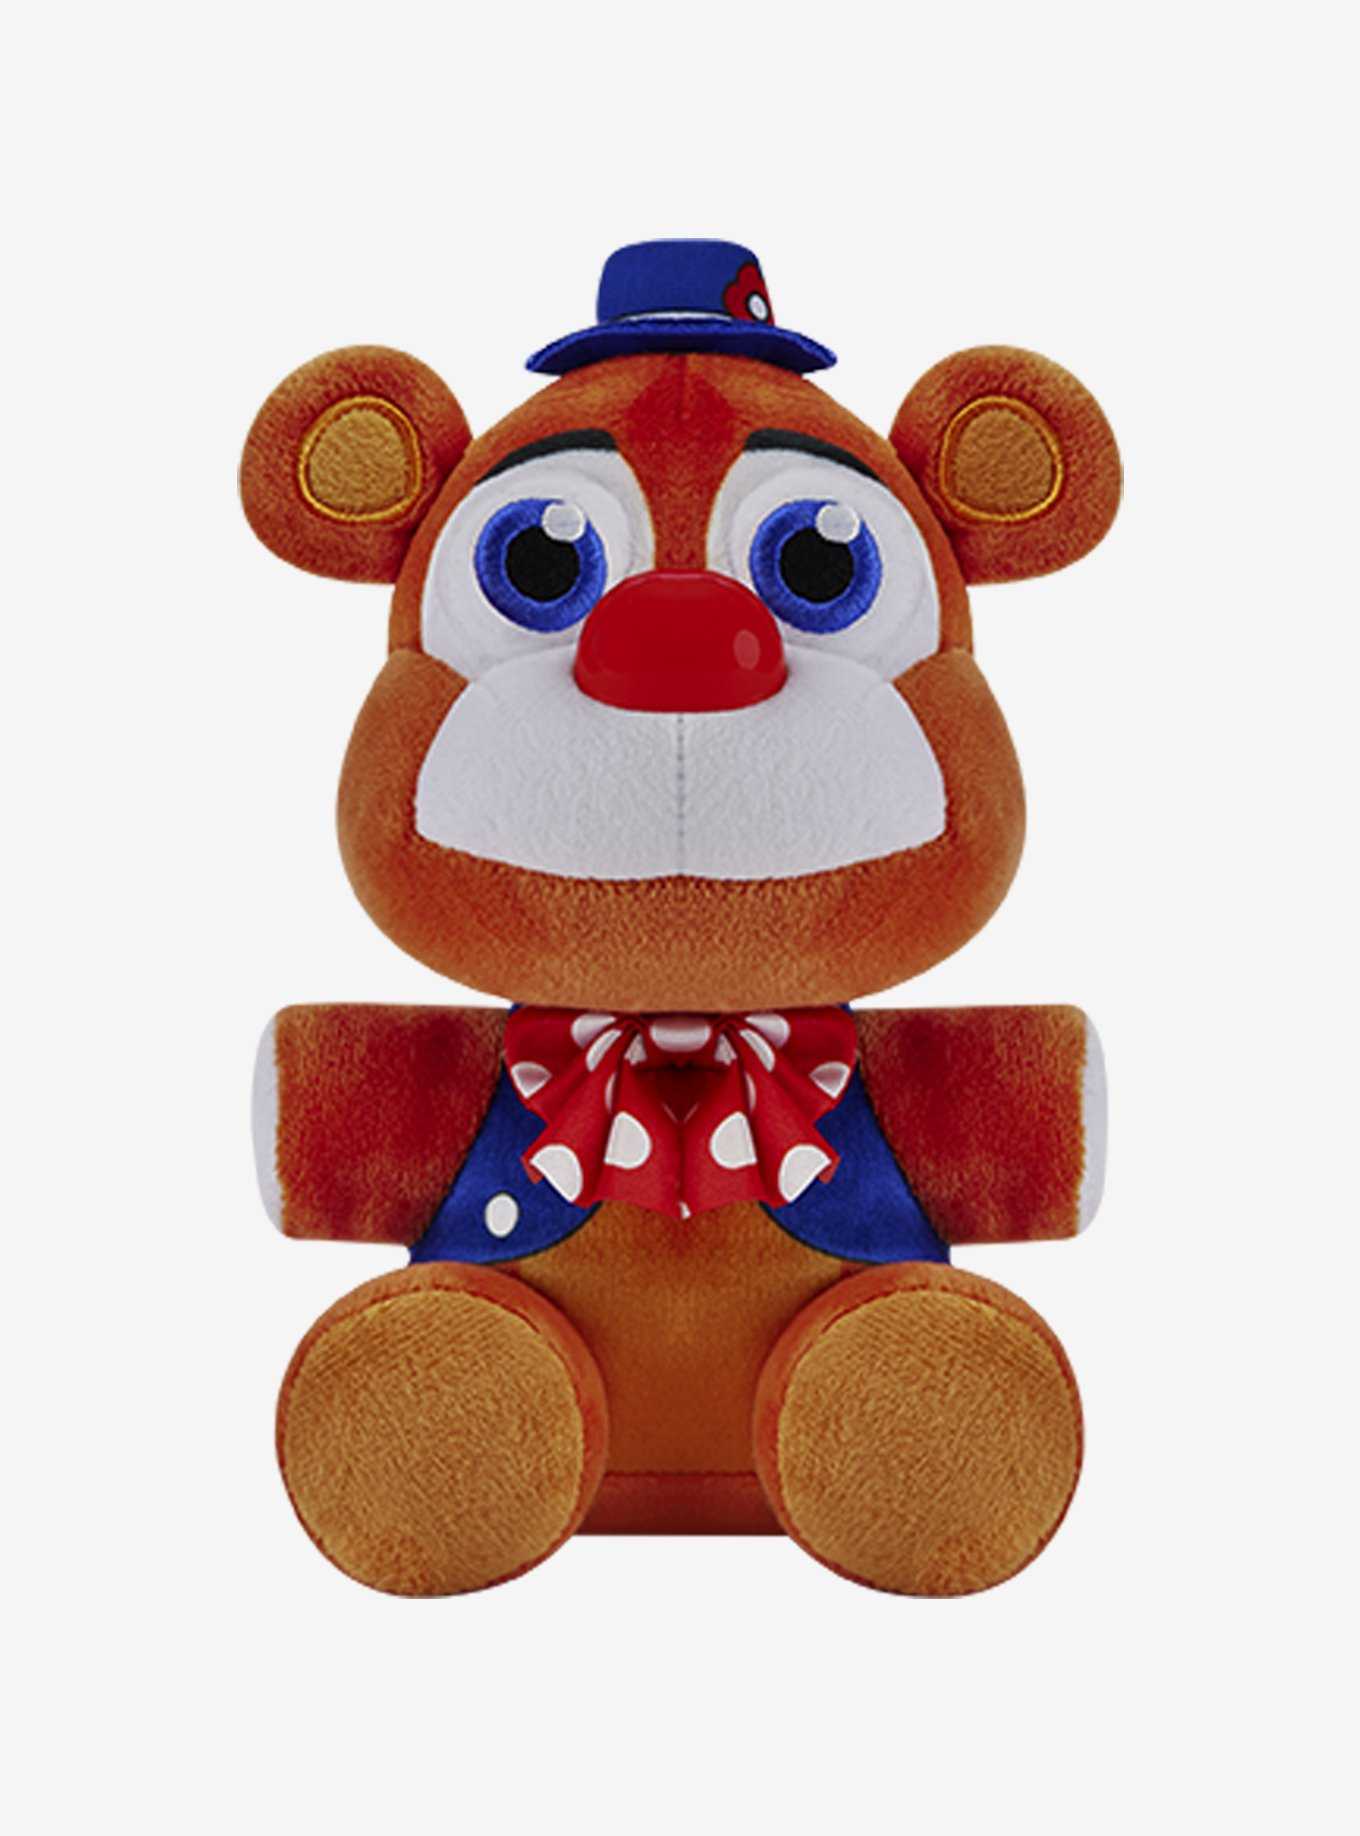 Ready Stock FNAF Five Nights At Freddy's Plush Toy Stuffed Animal Chica  Bonny Foxy Fans Gift zfDn